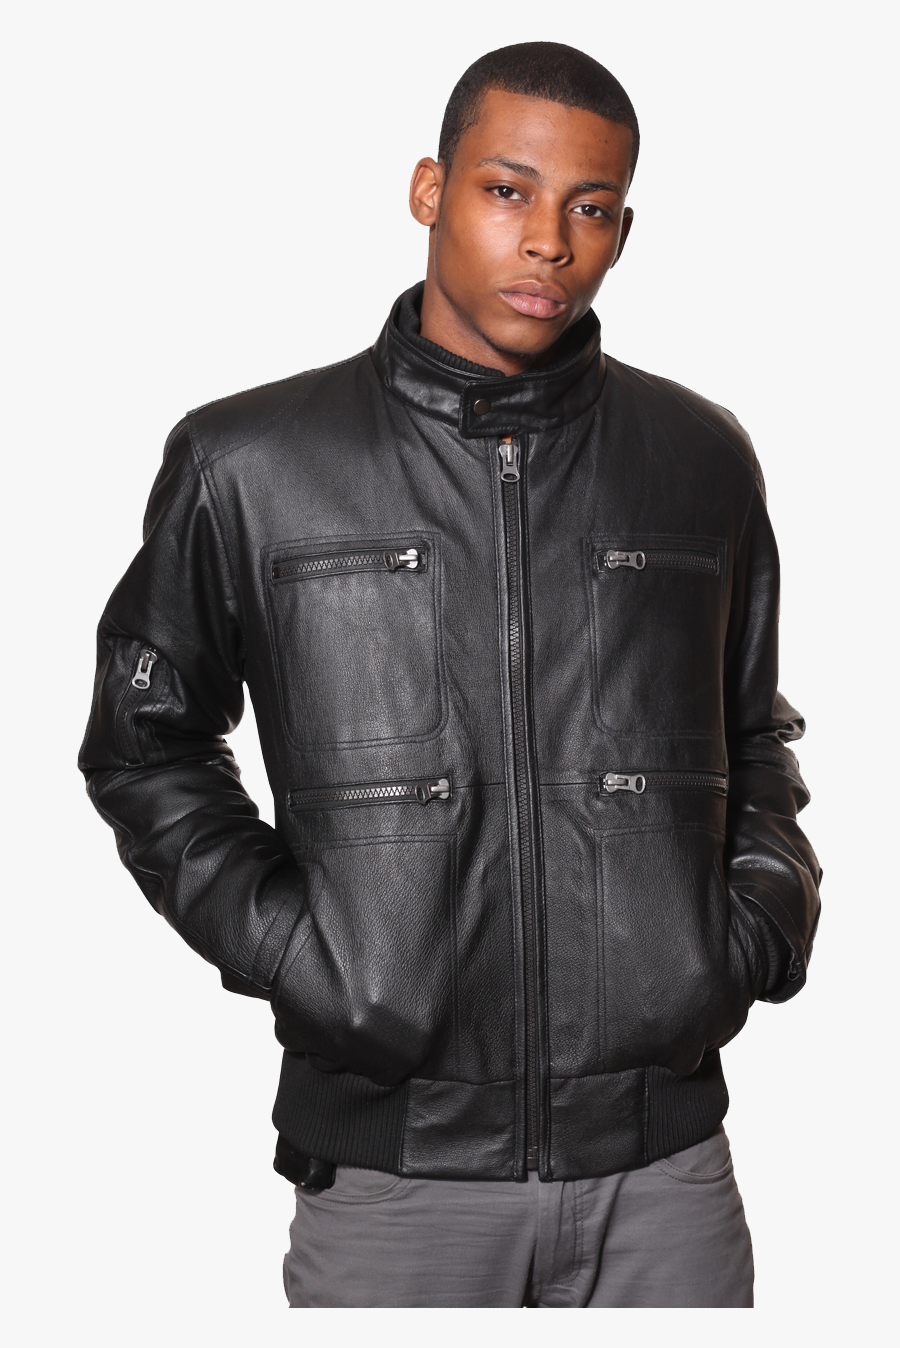 Leather Jacket For Men Png Clipart - Leather Jacket, Transparent Clipart